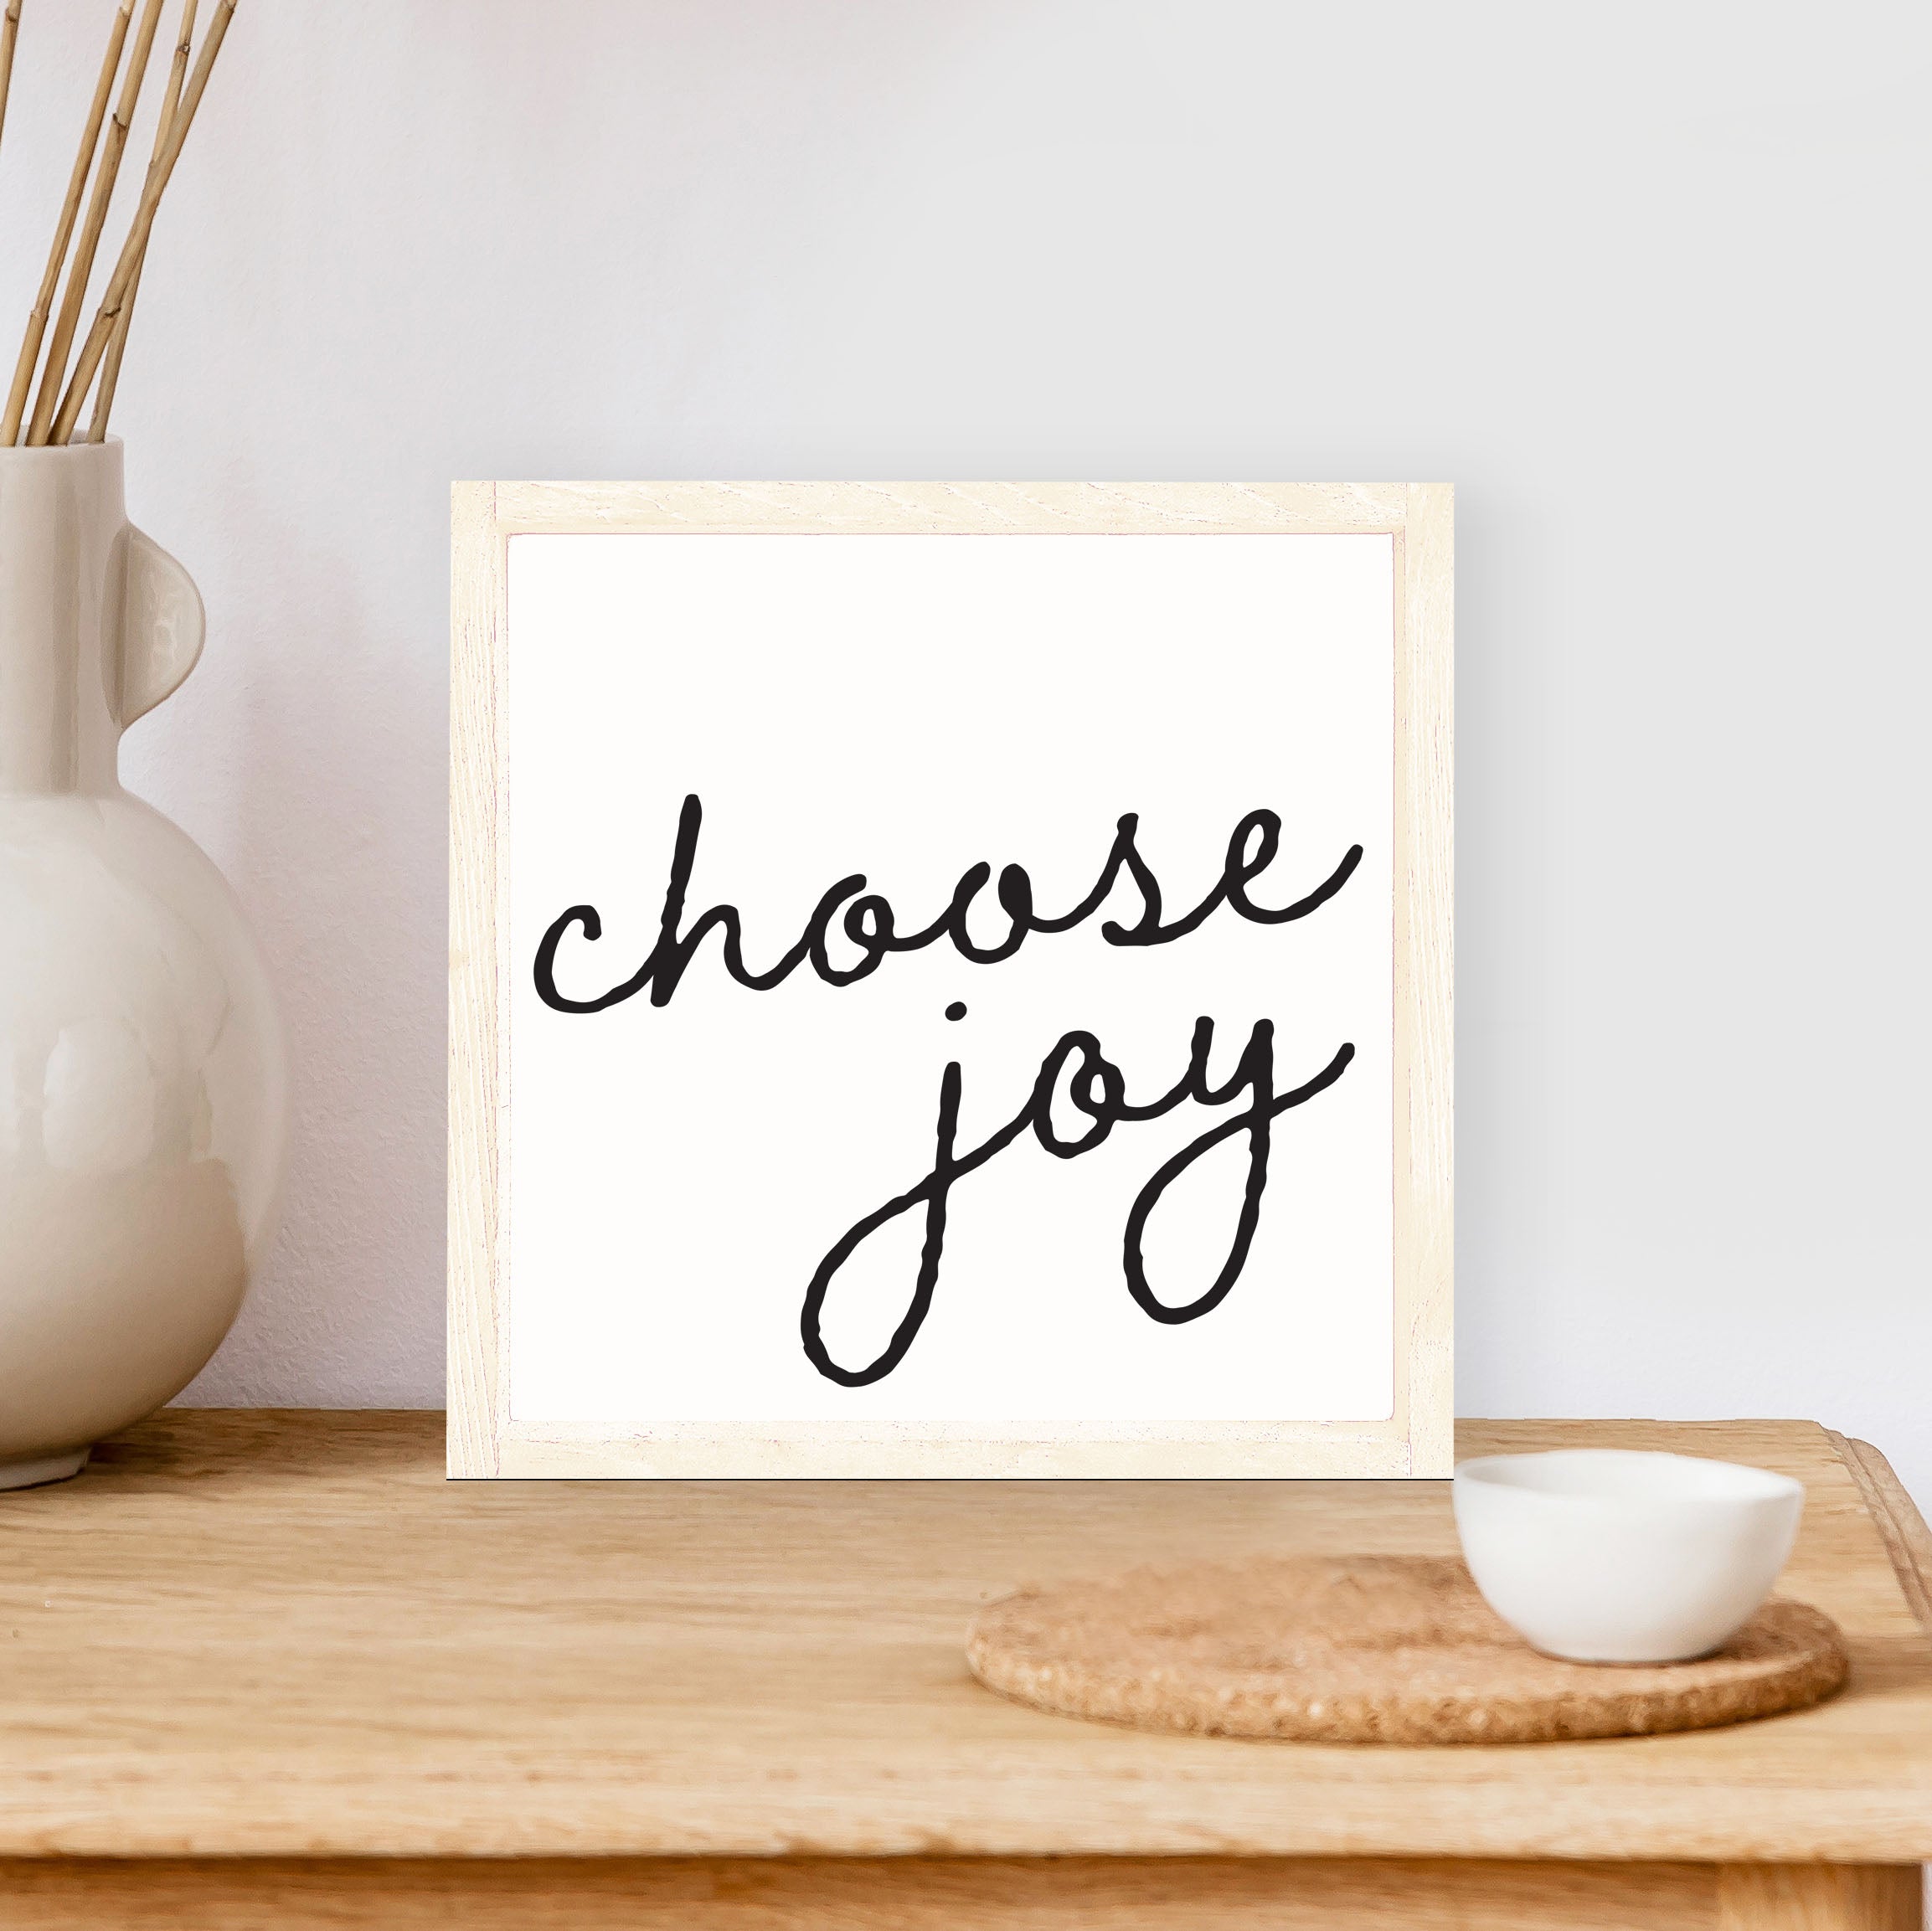 Choose Joy Wood Sign